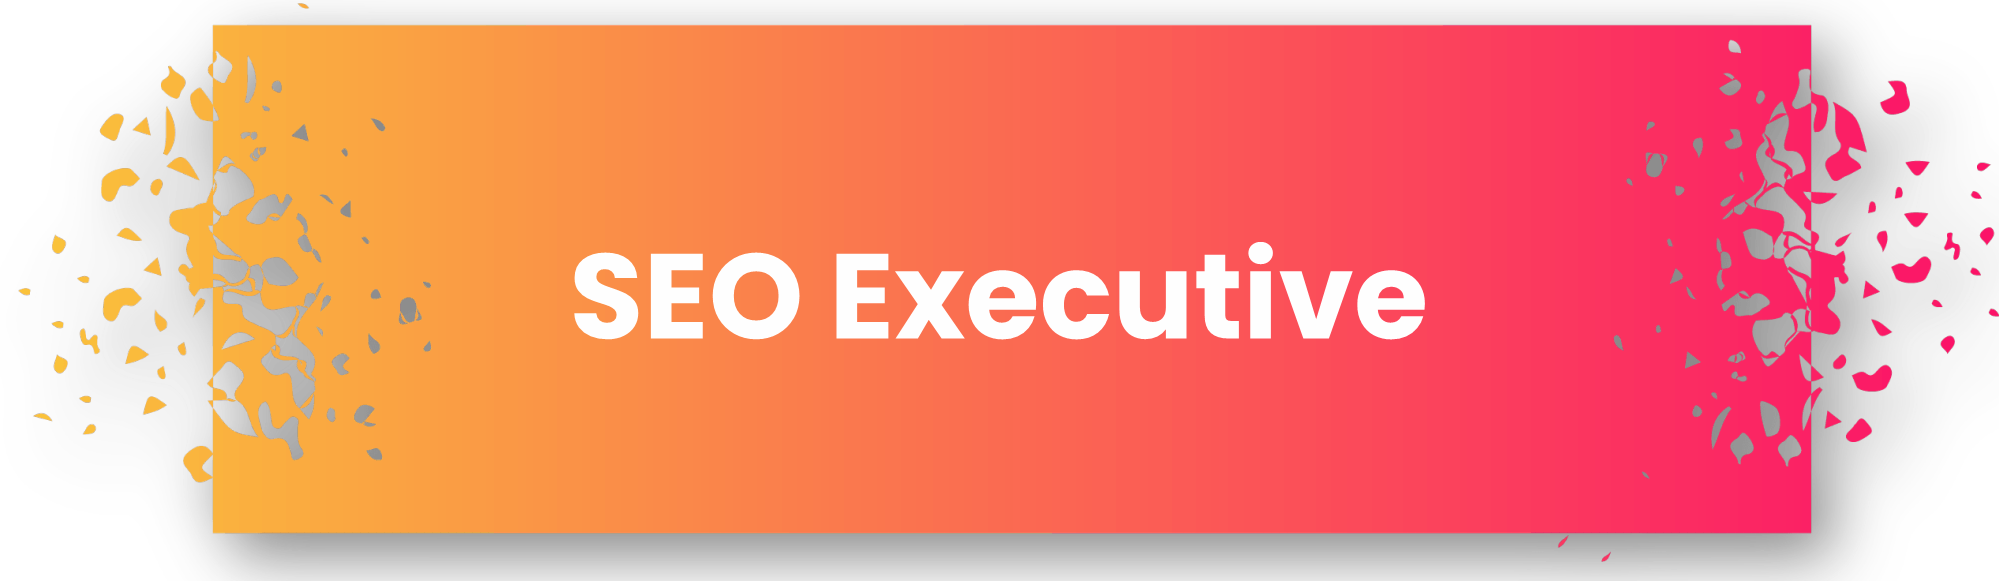 SEO Executive